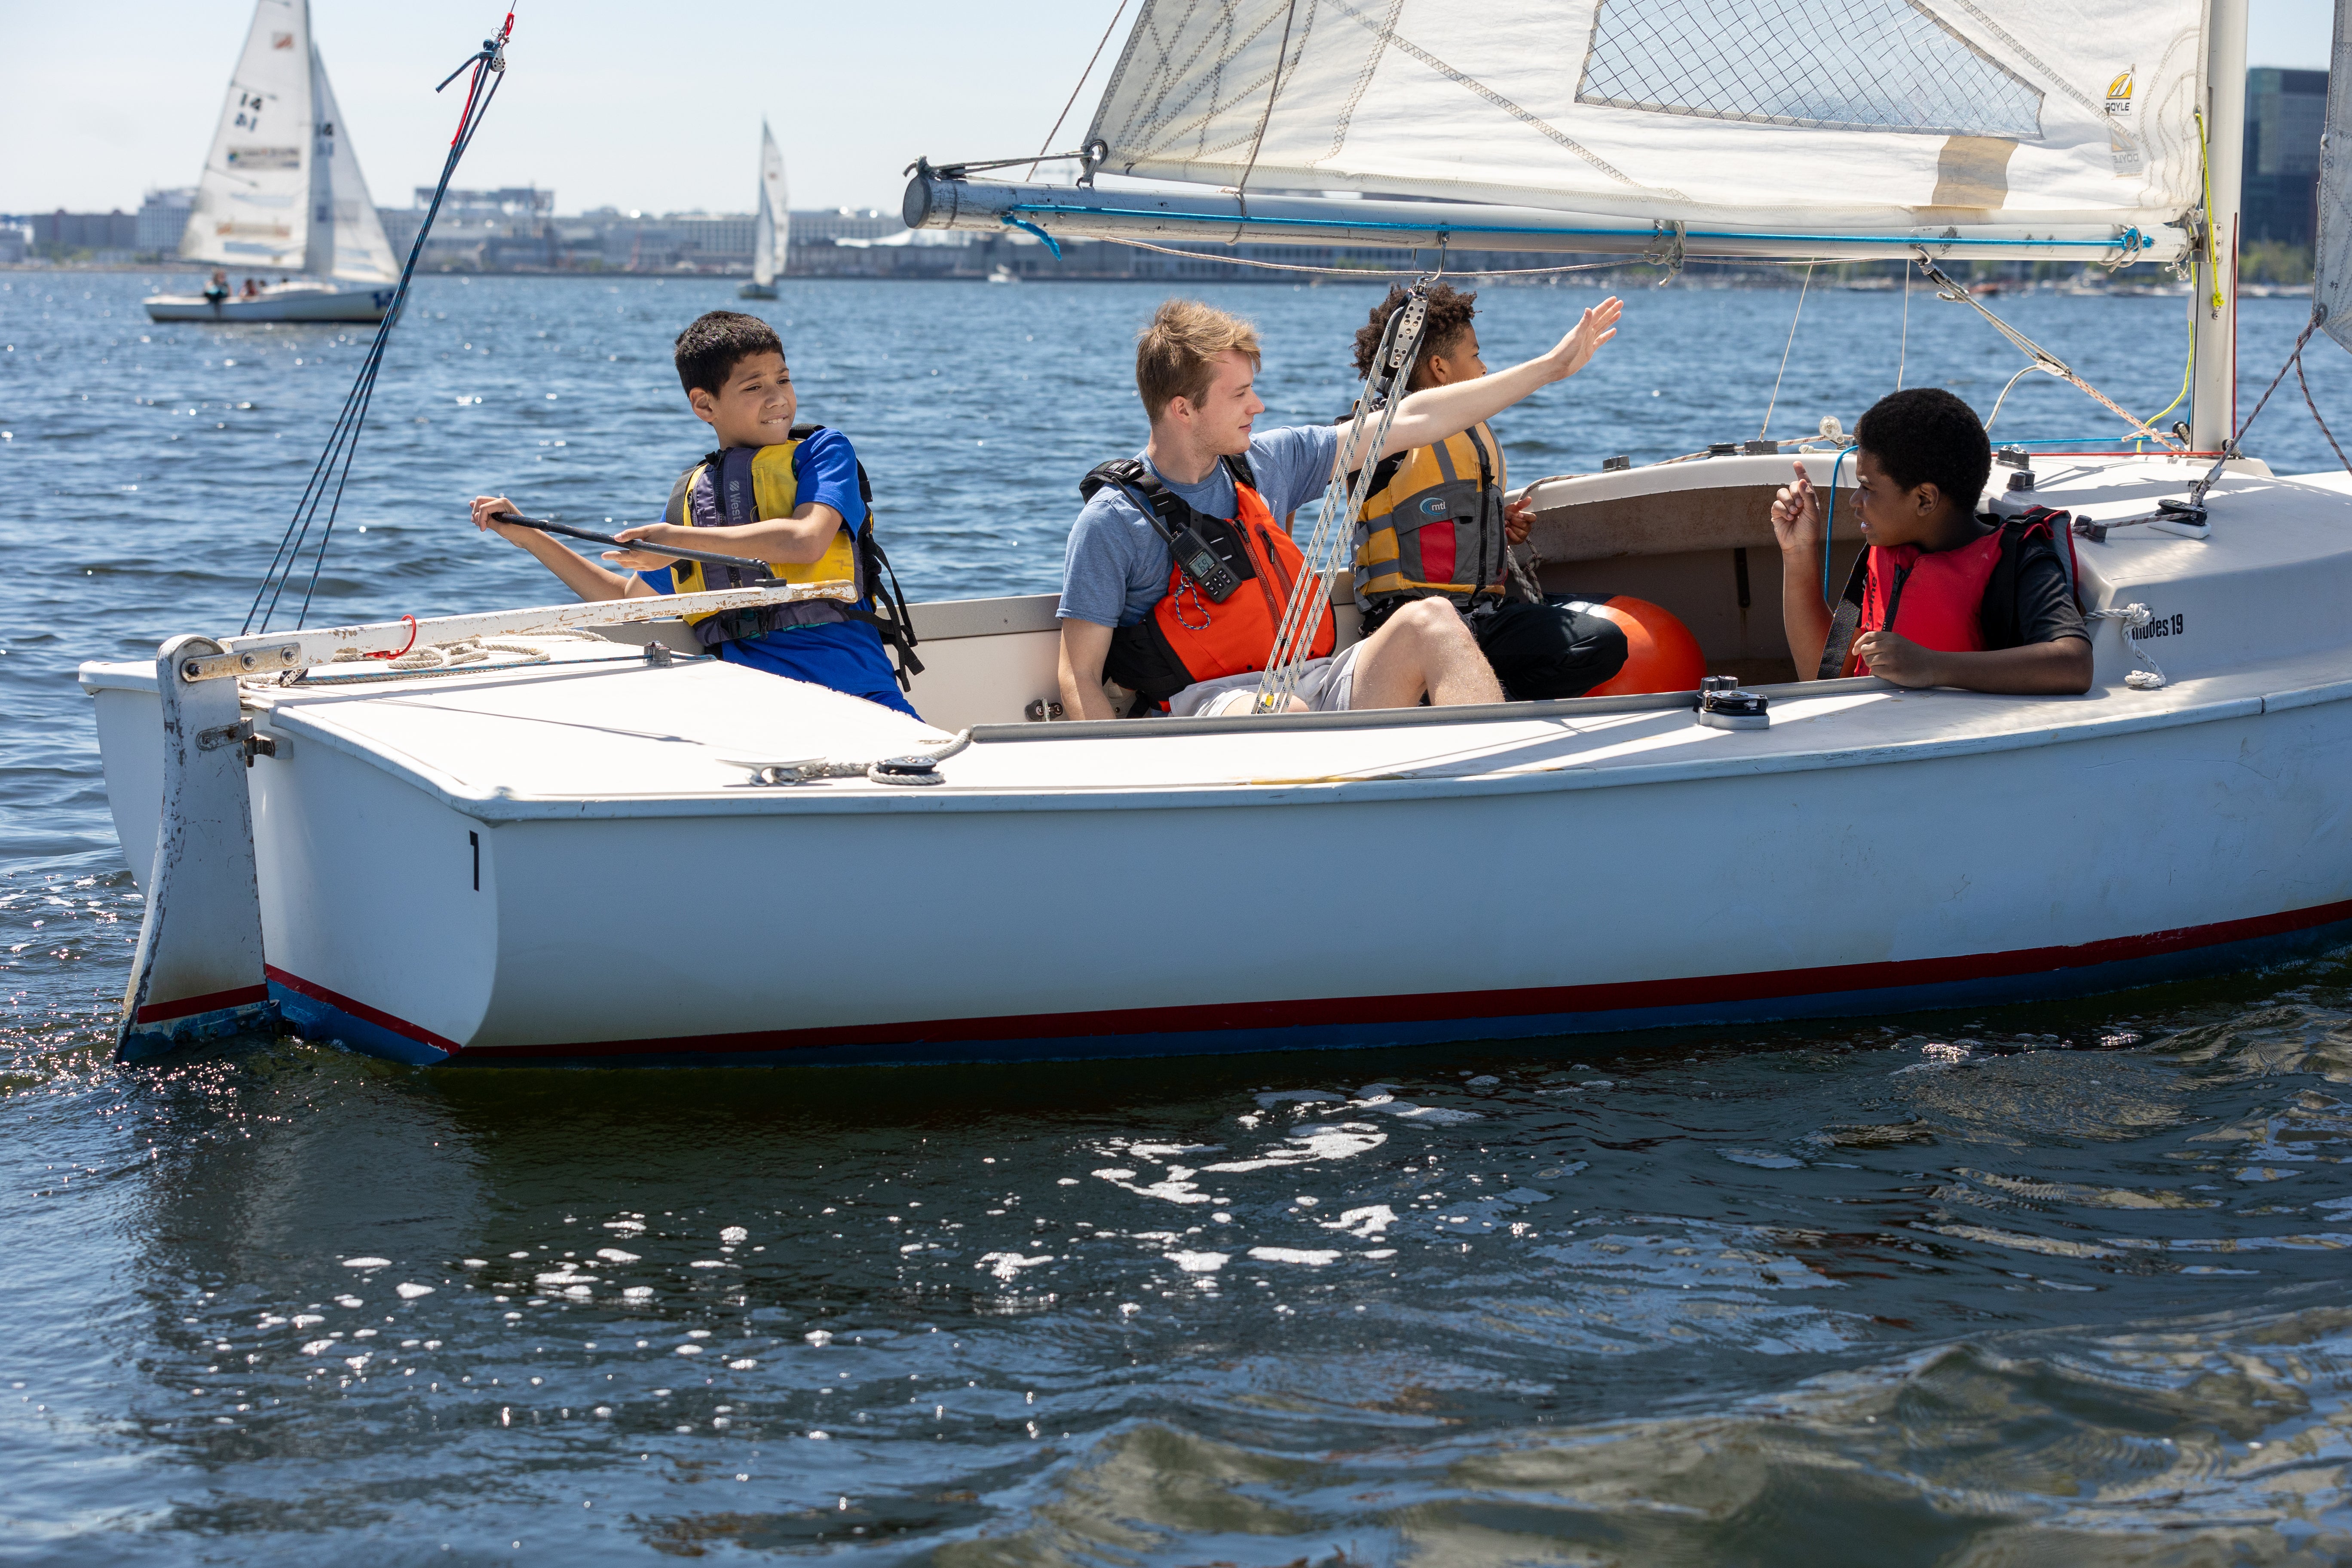 Four children on sailboat in Boston afterschool program.